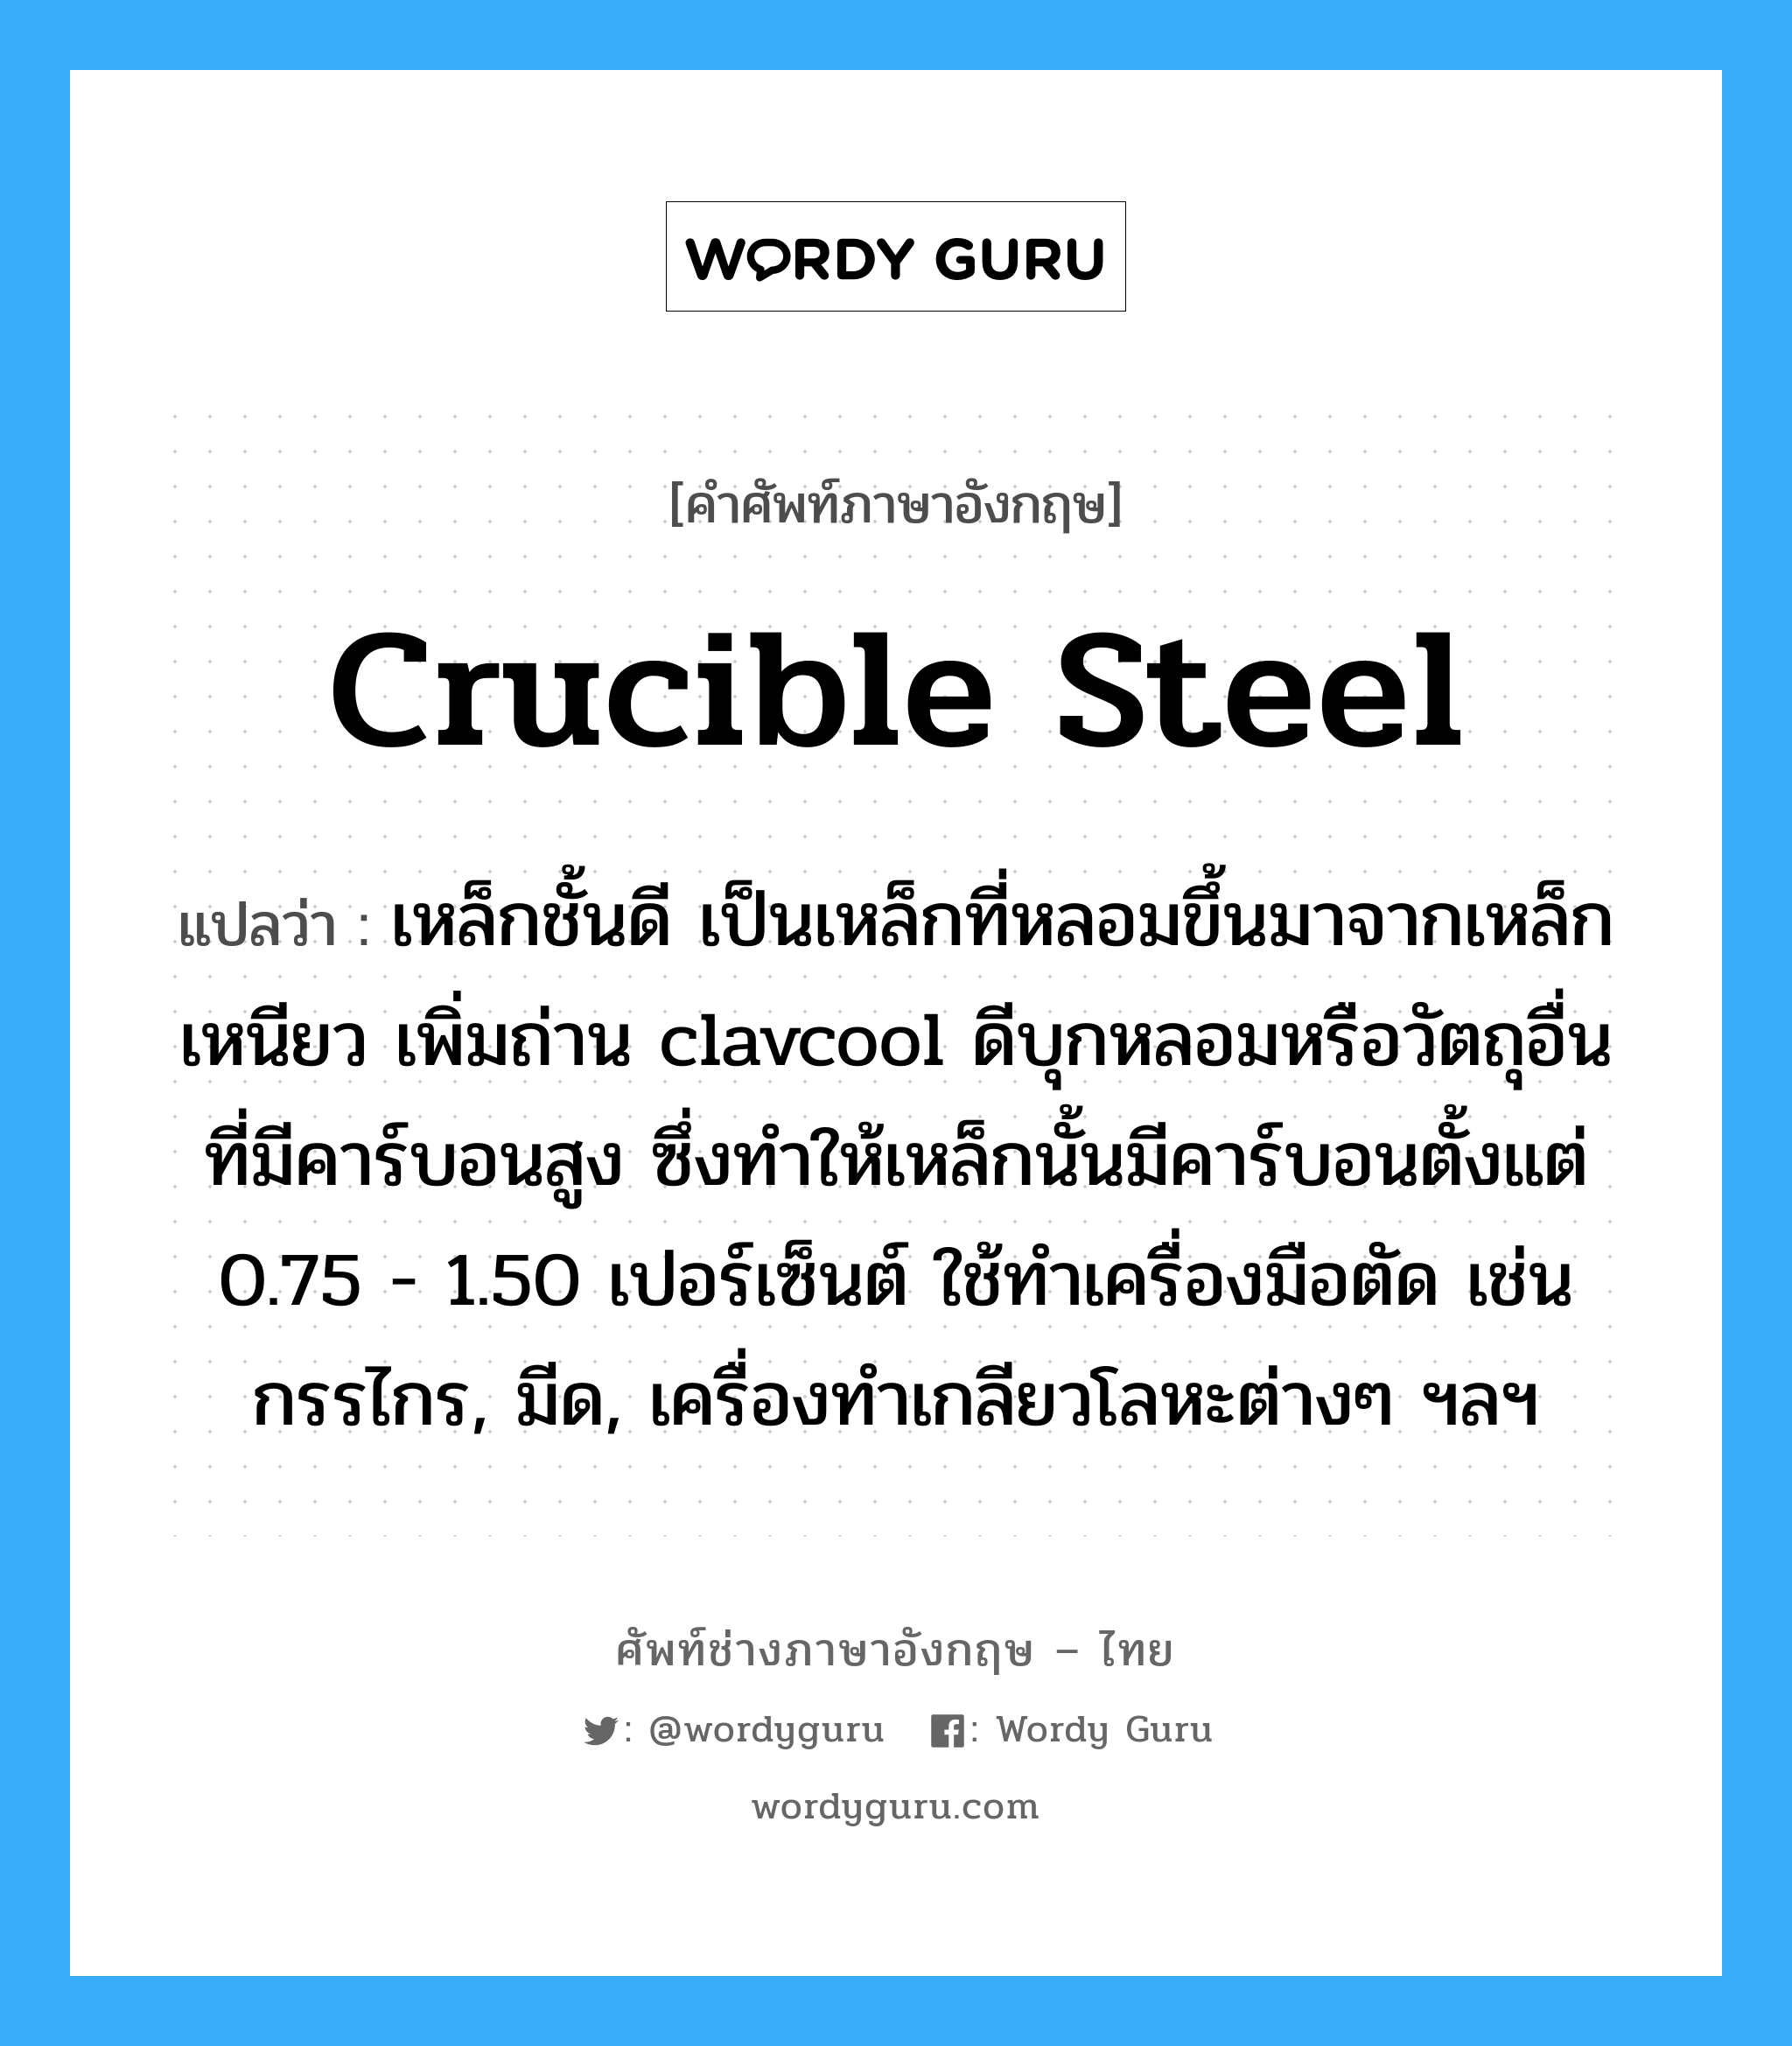 crucible steel แปลว่า?, คำศัพท์ช่างภาษาอังกฤษ - ไทย crucible steel คำศัพท์ภาษาอังกฤษ crucible steel แปลว่า เหล็กชั้นดี เป็นเหล็กที่หลอมขึ้นมาจากเหล็กเหนียว เพิ่มถ่าน clavcool ดีบุกหลอมหรือวัตถุอื่นที่มีคาร์บอนสูง ซึ่งทำให้เหล็กนั้นมีคาร์บอนตั้งแต่ 0.75 - 1.50 เปอร์เซ็นต์ ใช้ทำเครื่องมือตัด เช่น กรรไกร, มีด, เครื่องทำเกลียวโลหะต่างๆ ฯลฯ